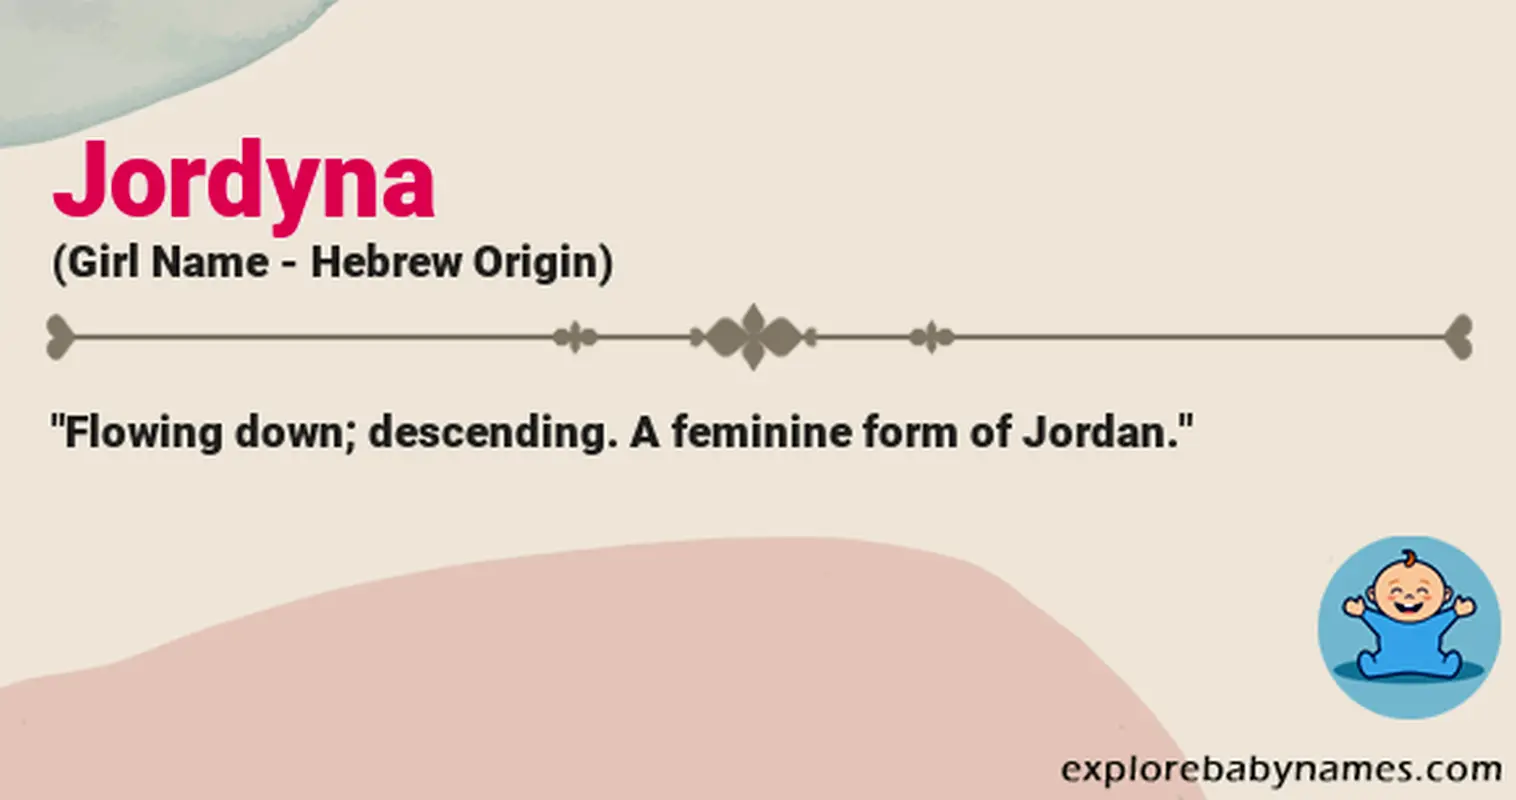 Meaning of Jordyna